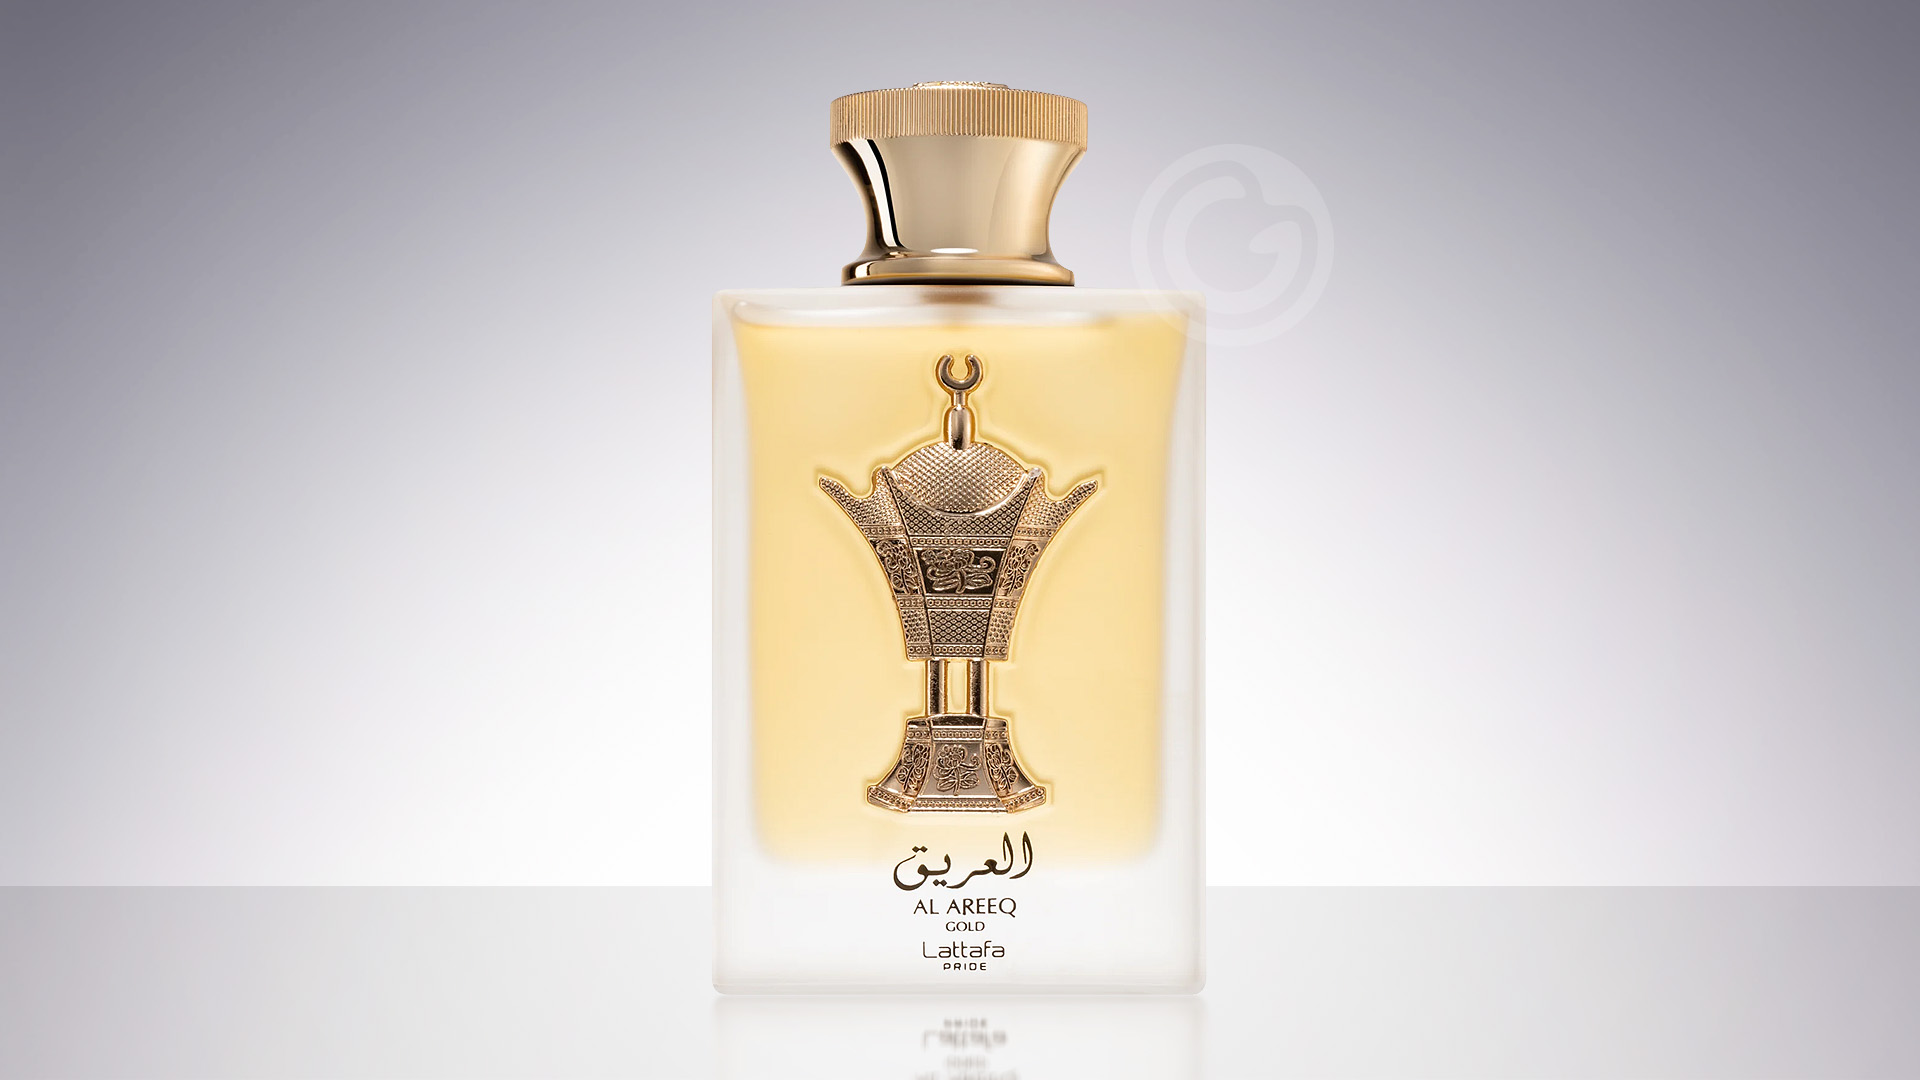 Al Areeq Gold Lattafa Pride Eau de Parfum